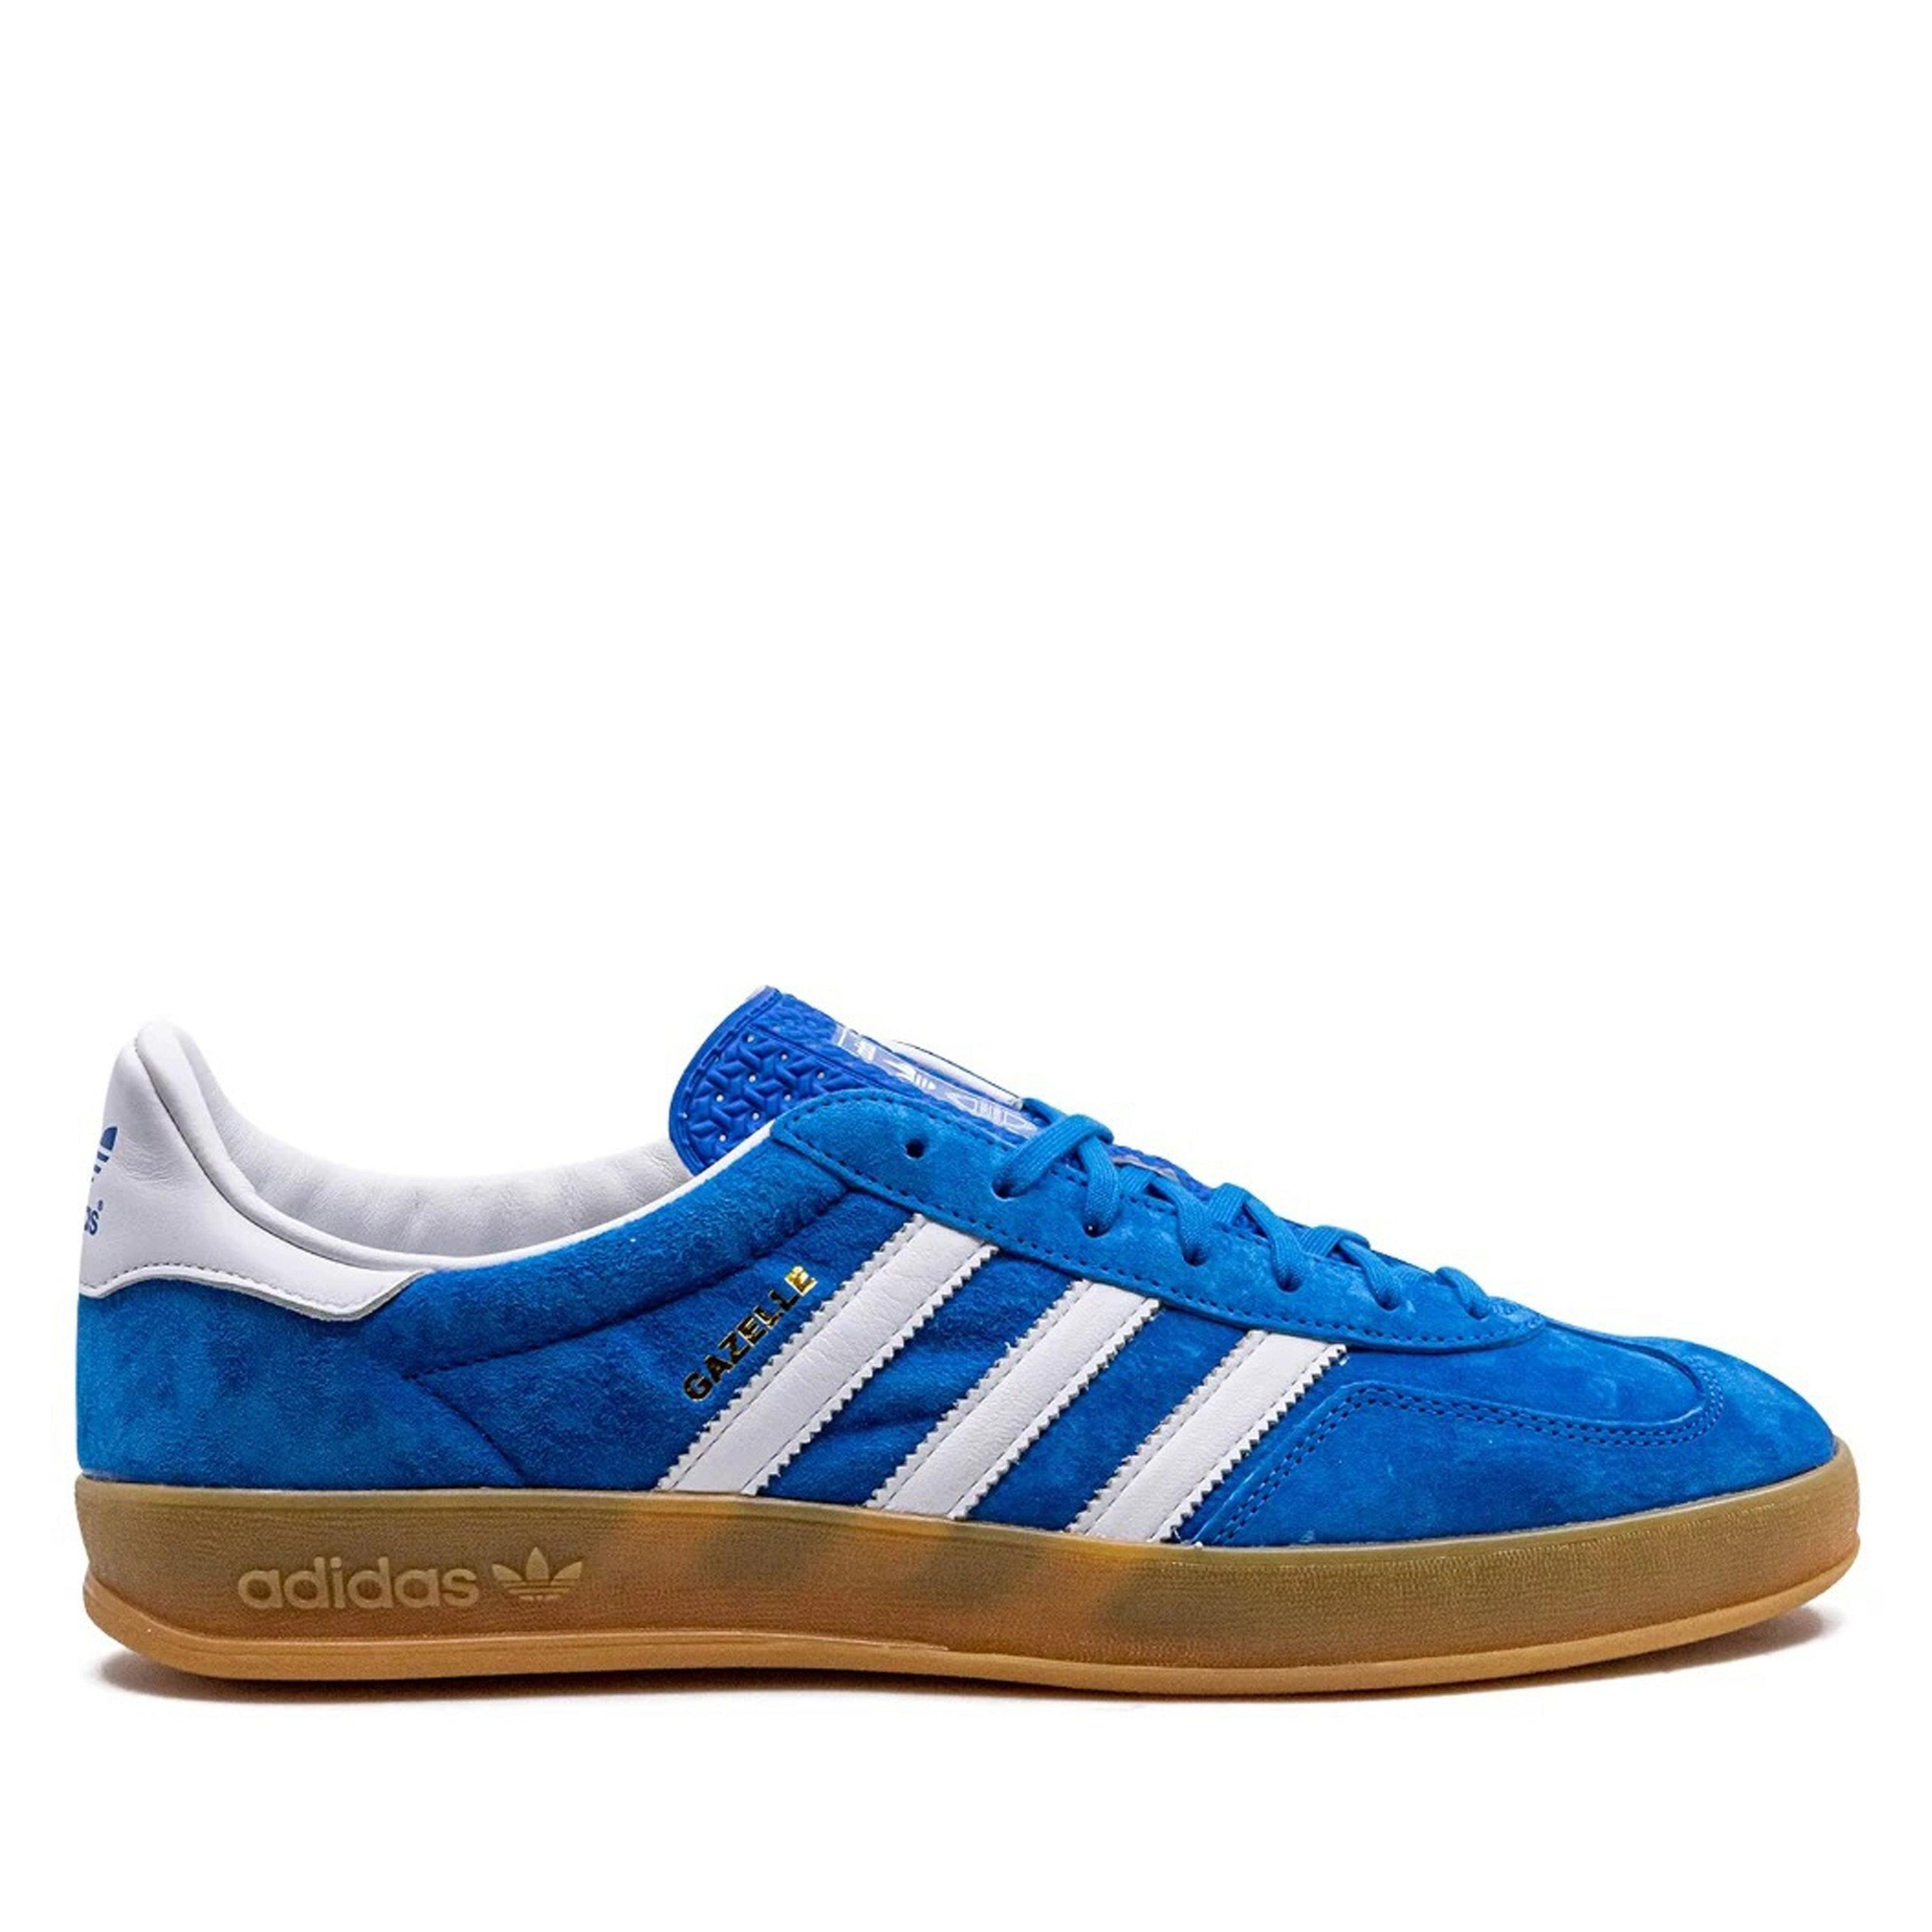 Adidas - Gazelle Indoor Sneakers - (Blue) by ADIDAS